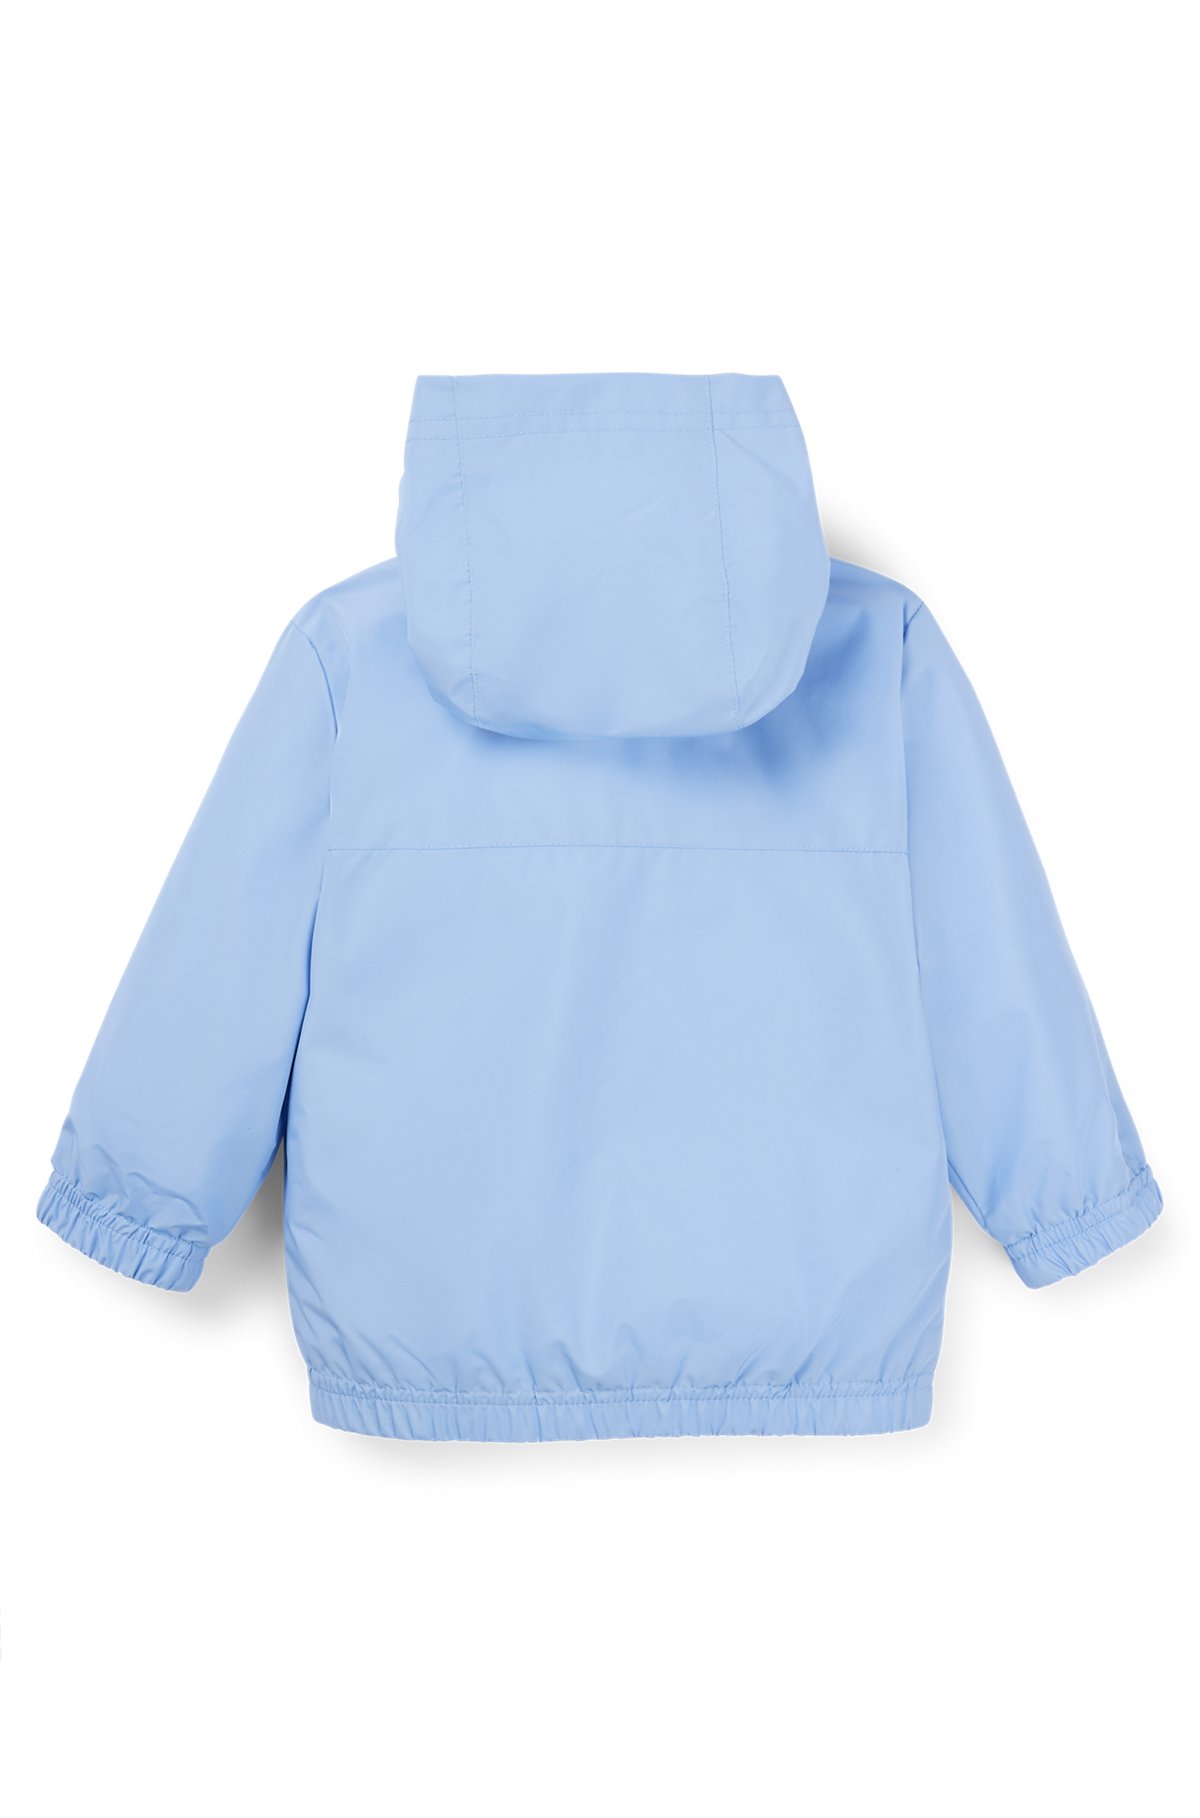 Kids' hooded windbreaker jacket in water-repellent fabric, Light Blue